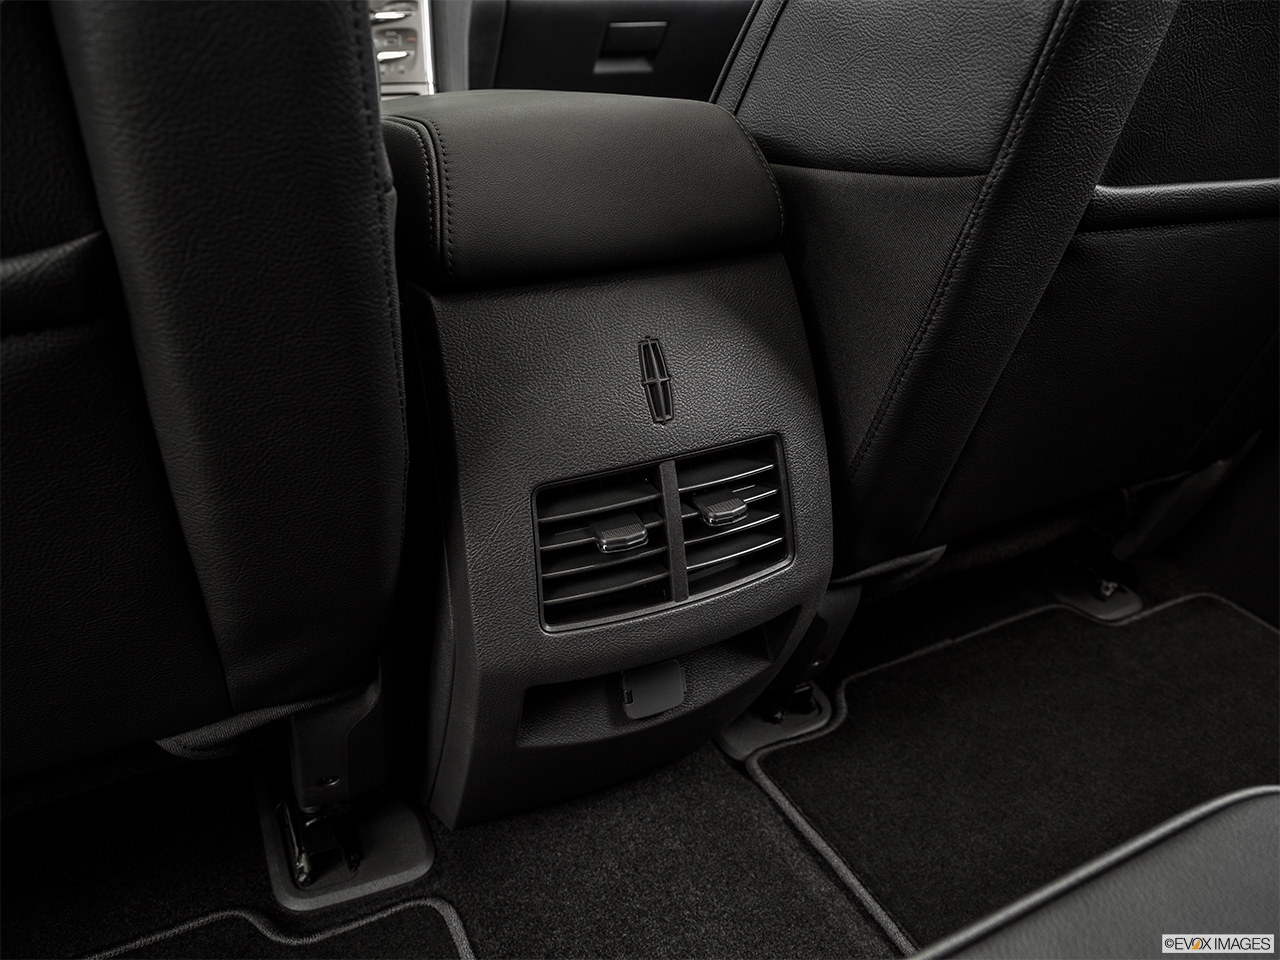 2015 Lincoln MKX FWD Rear A/C controls. 